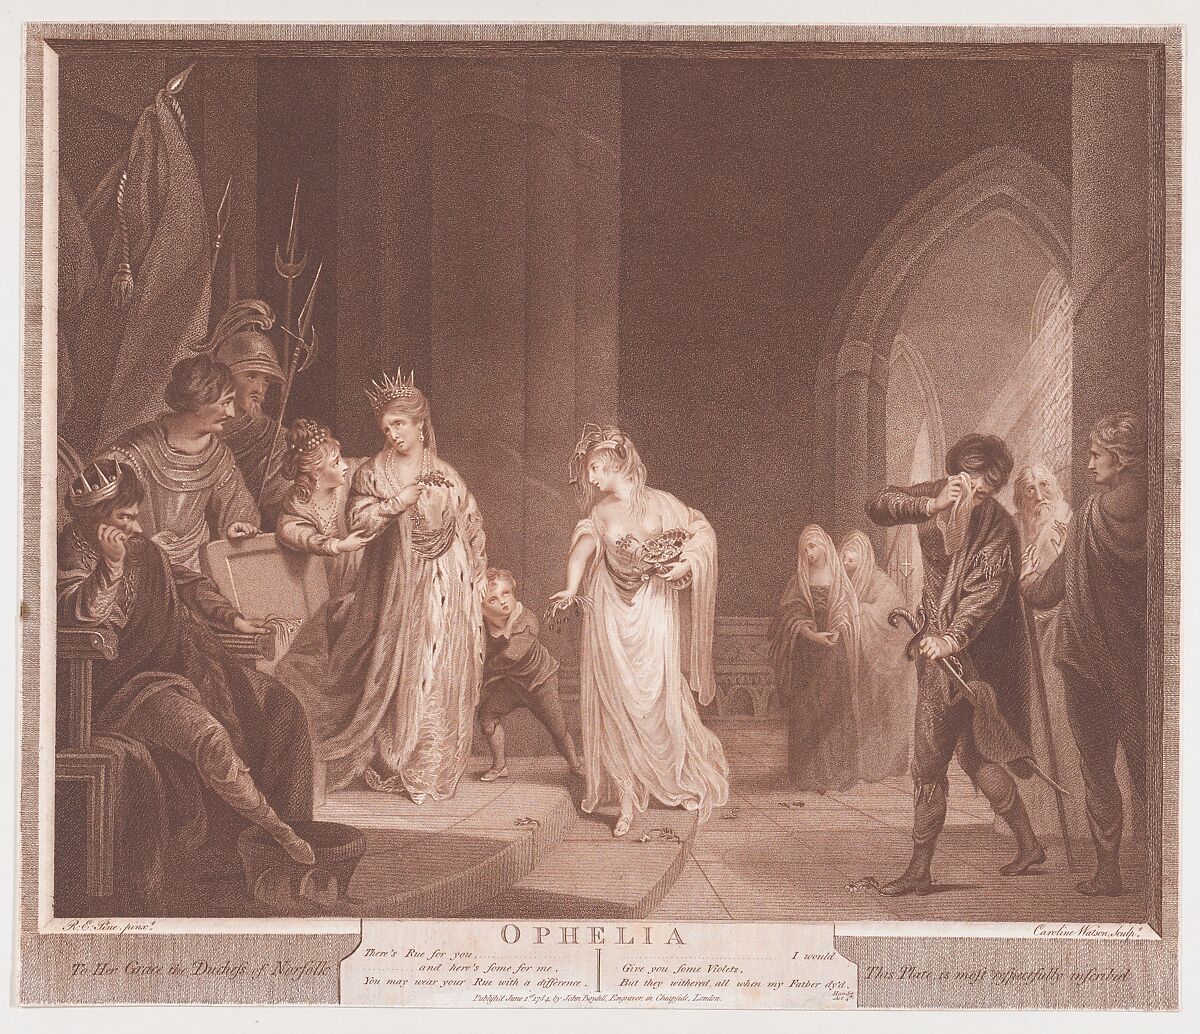 Ophelia (Shakespeare, Hamlet, Act 4, Scene 5)